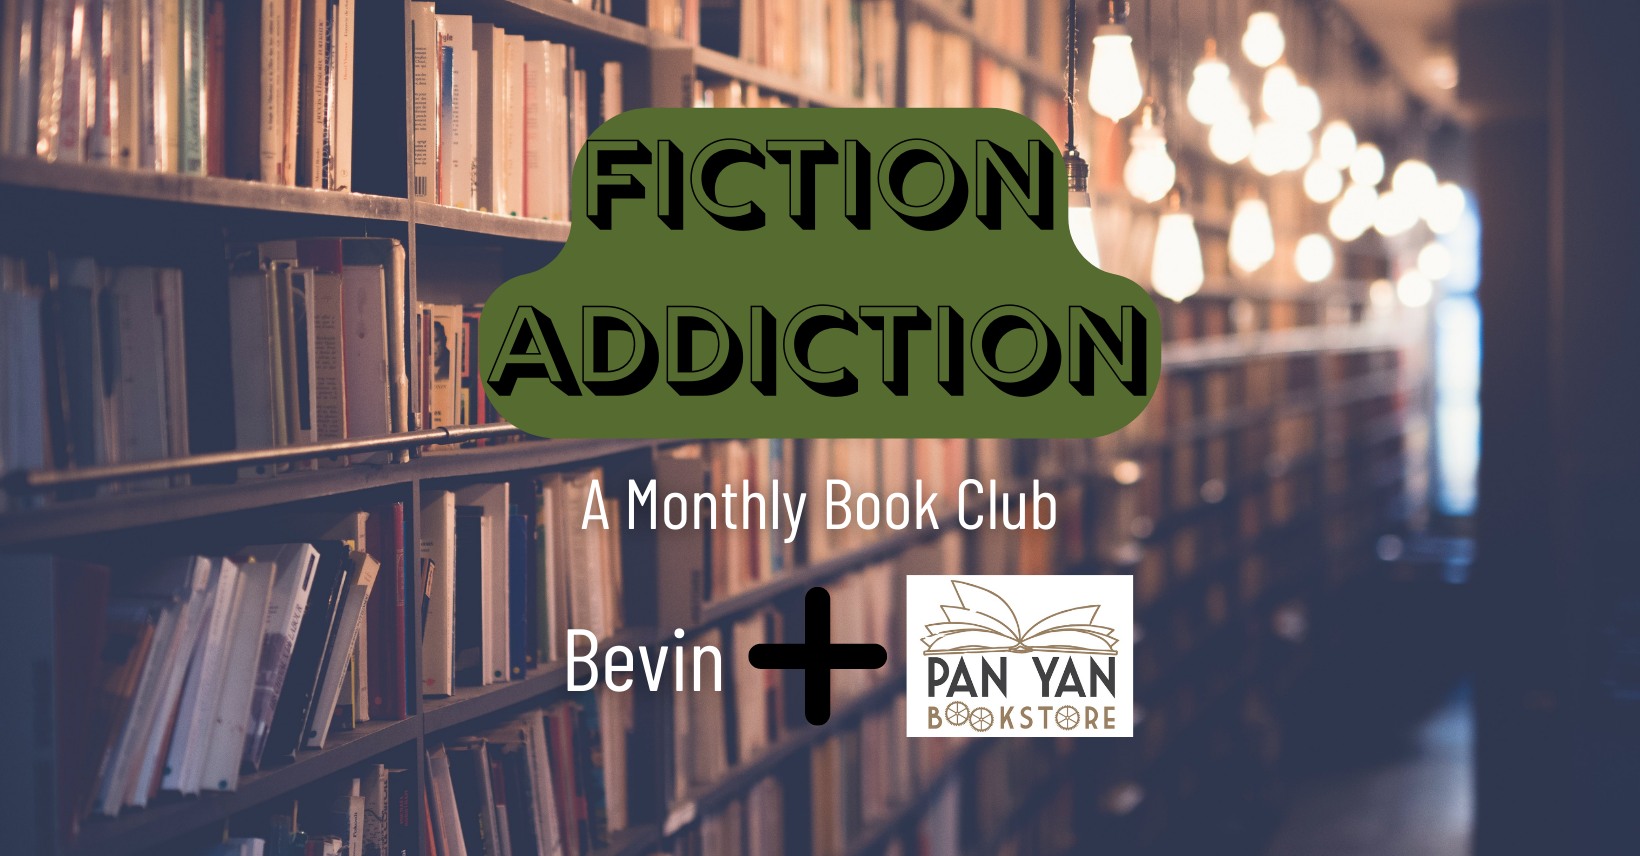 Fiction Addiction Book Club Meeting